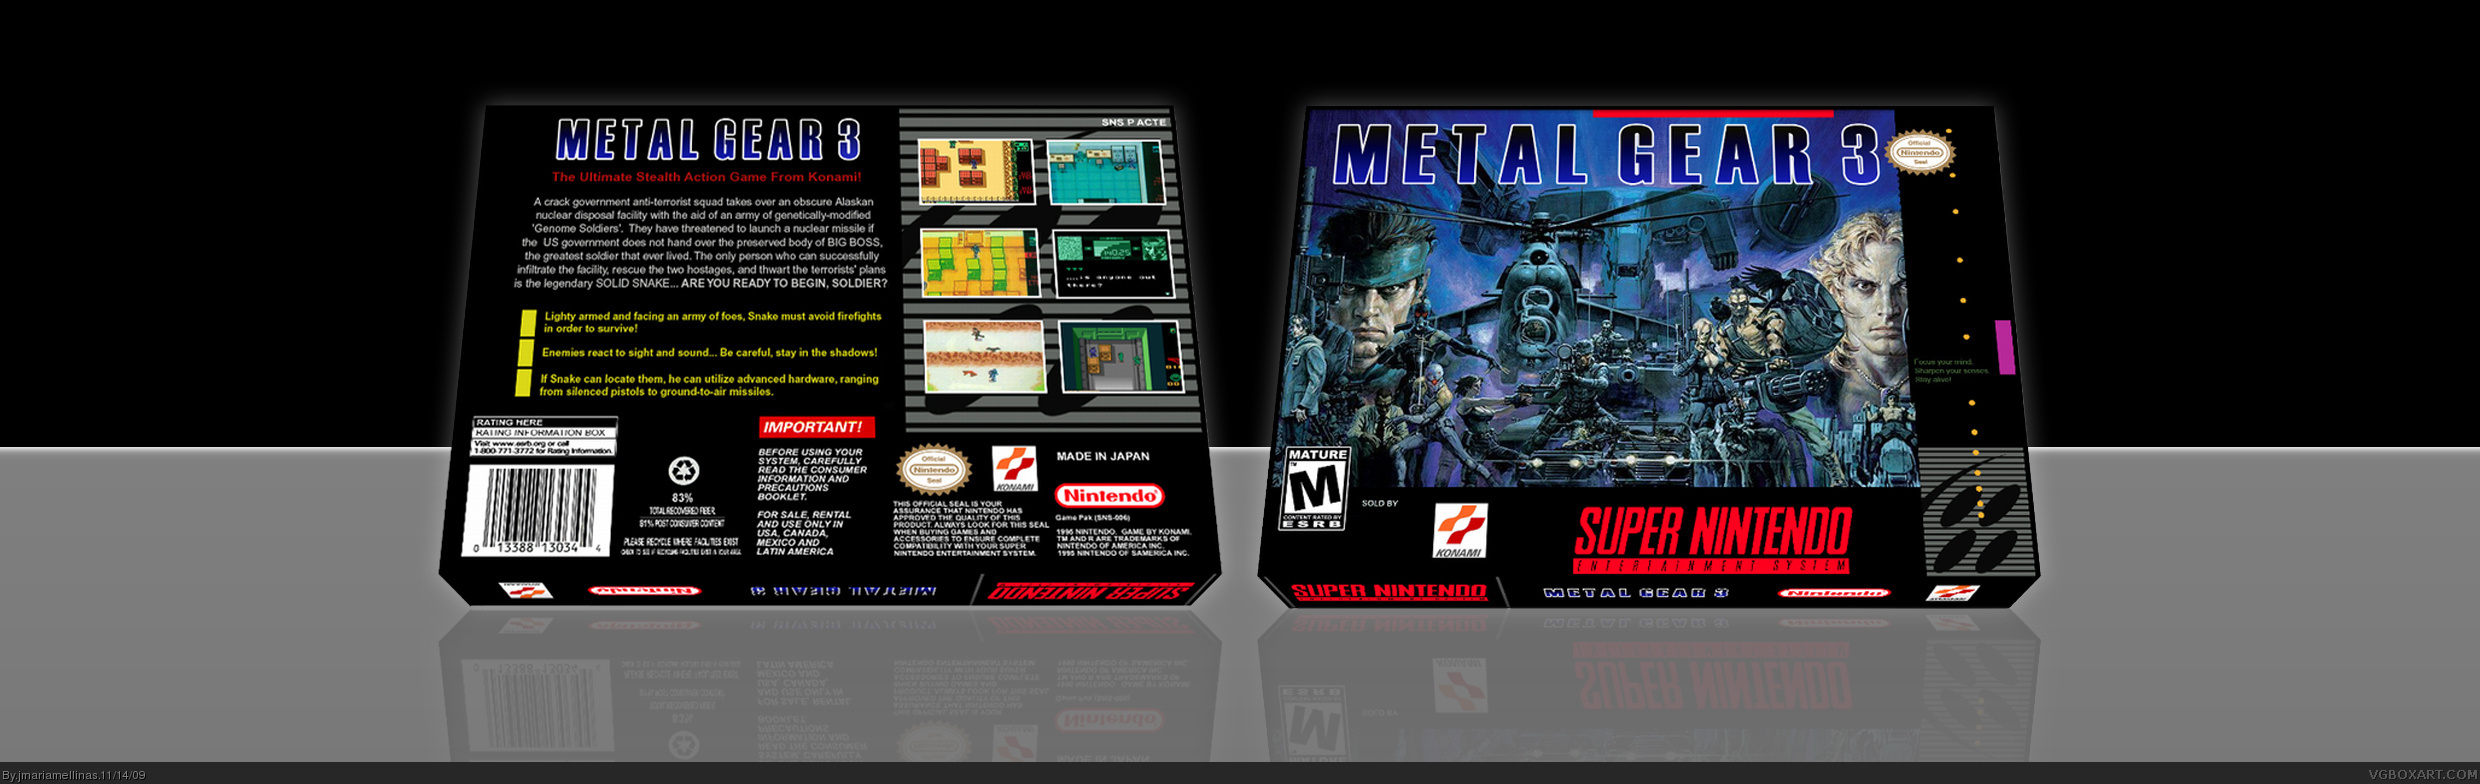 Metal Gear 3 box cover